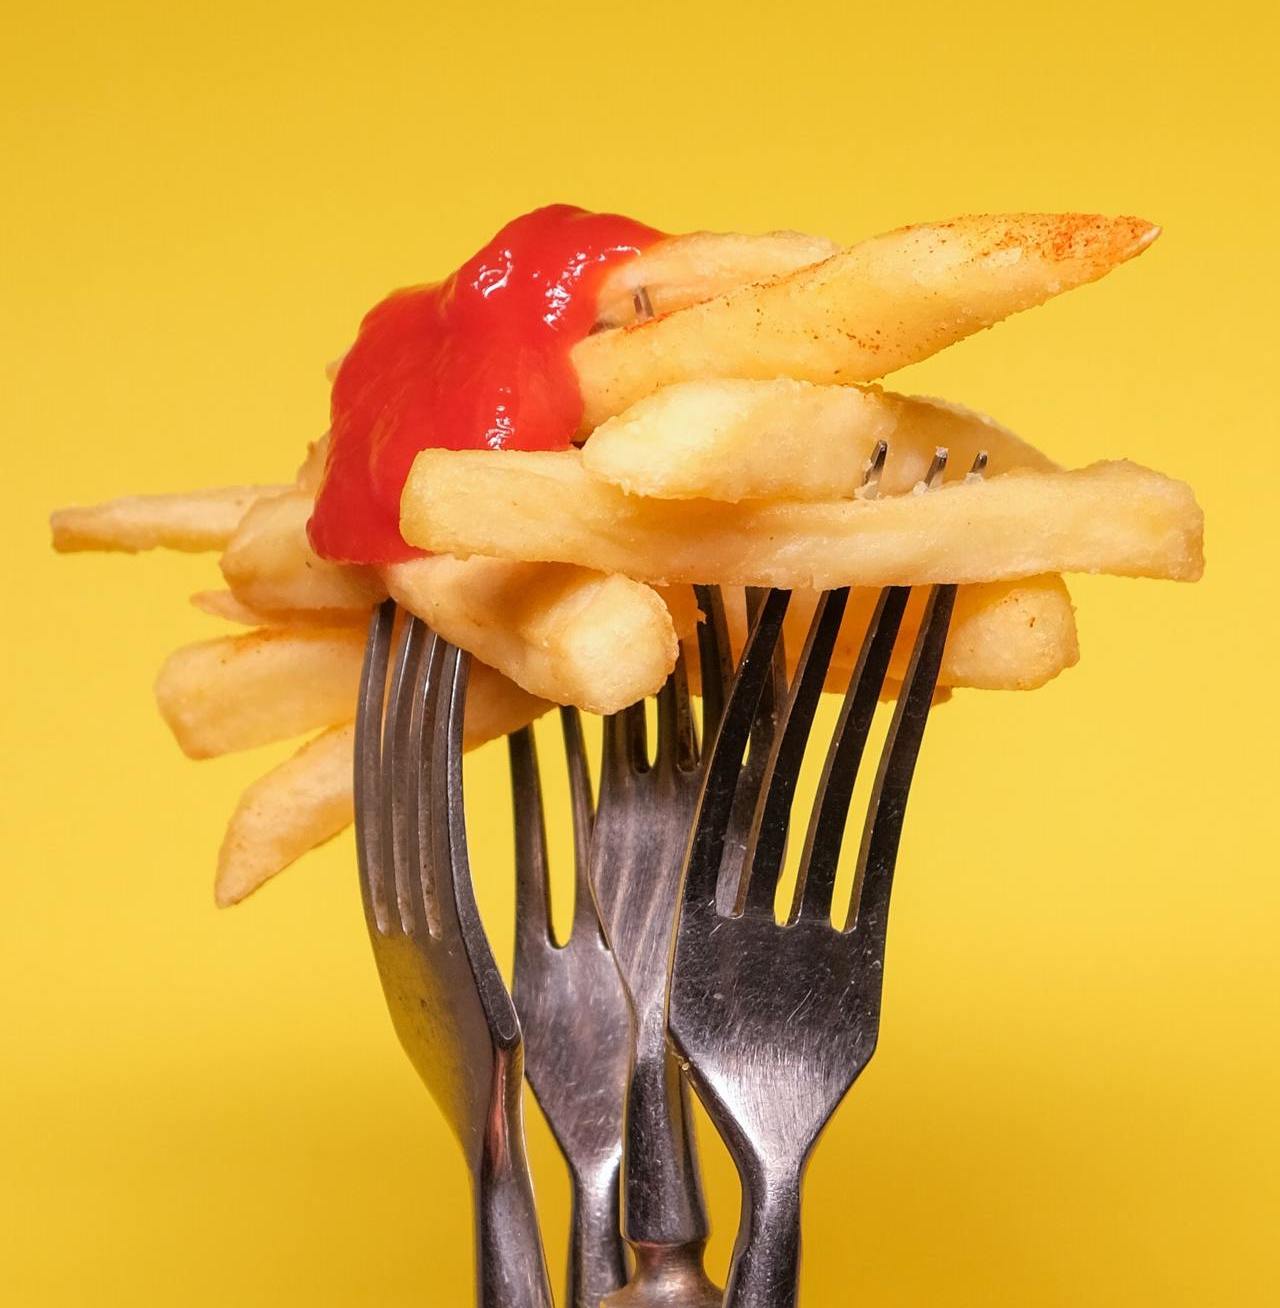 bright image of chips and ketchup